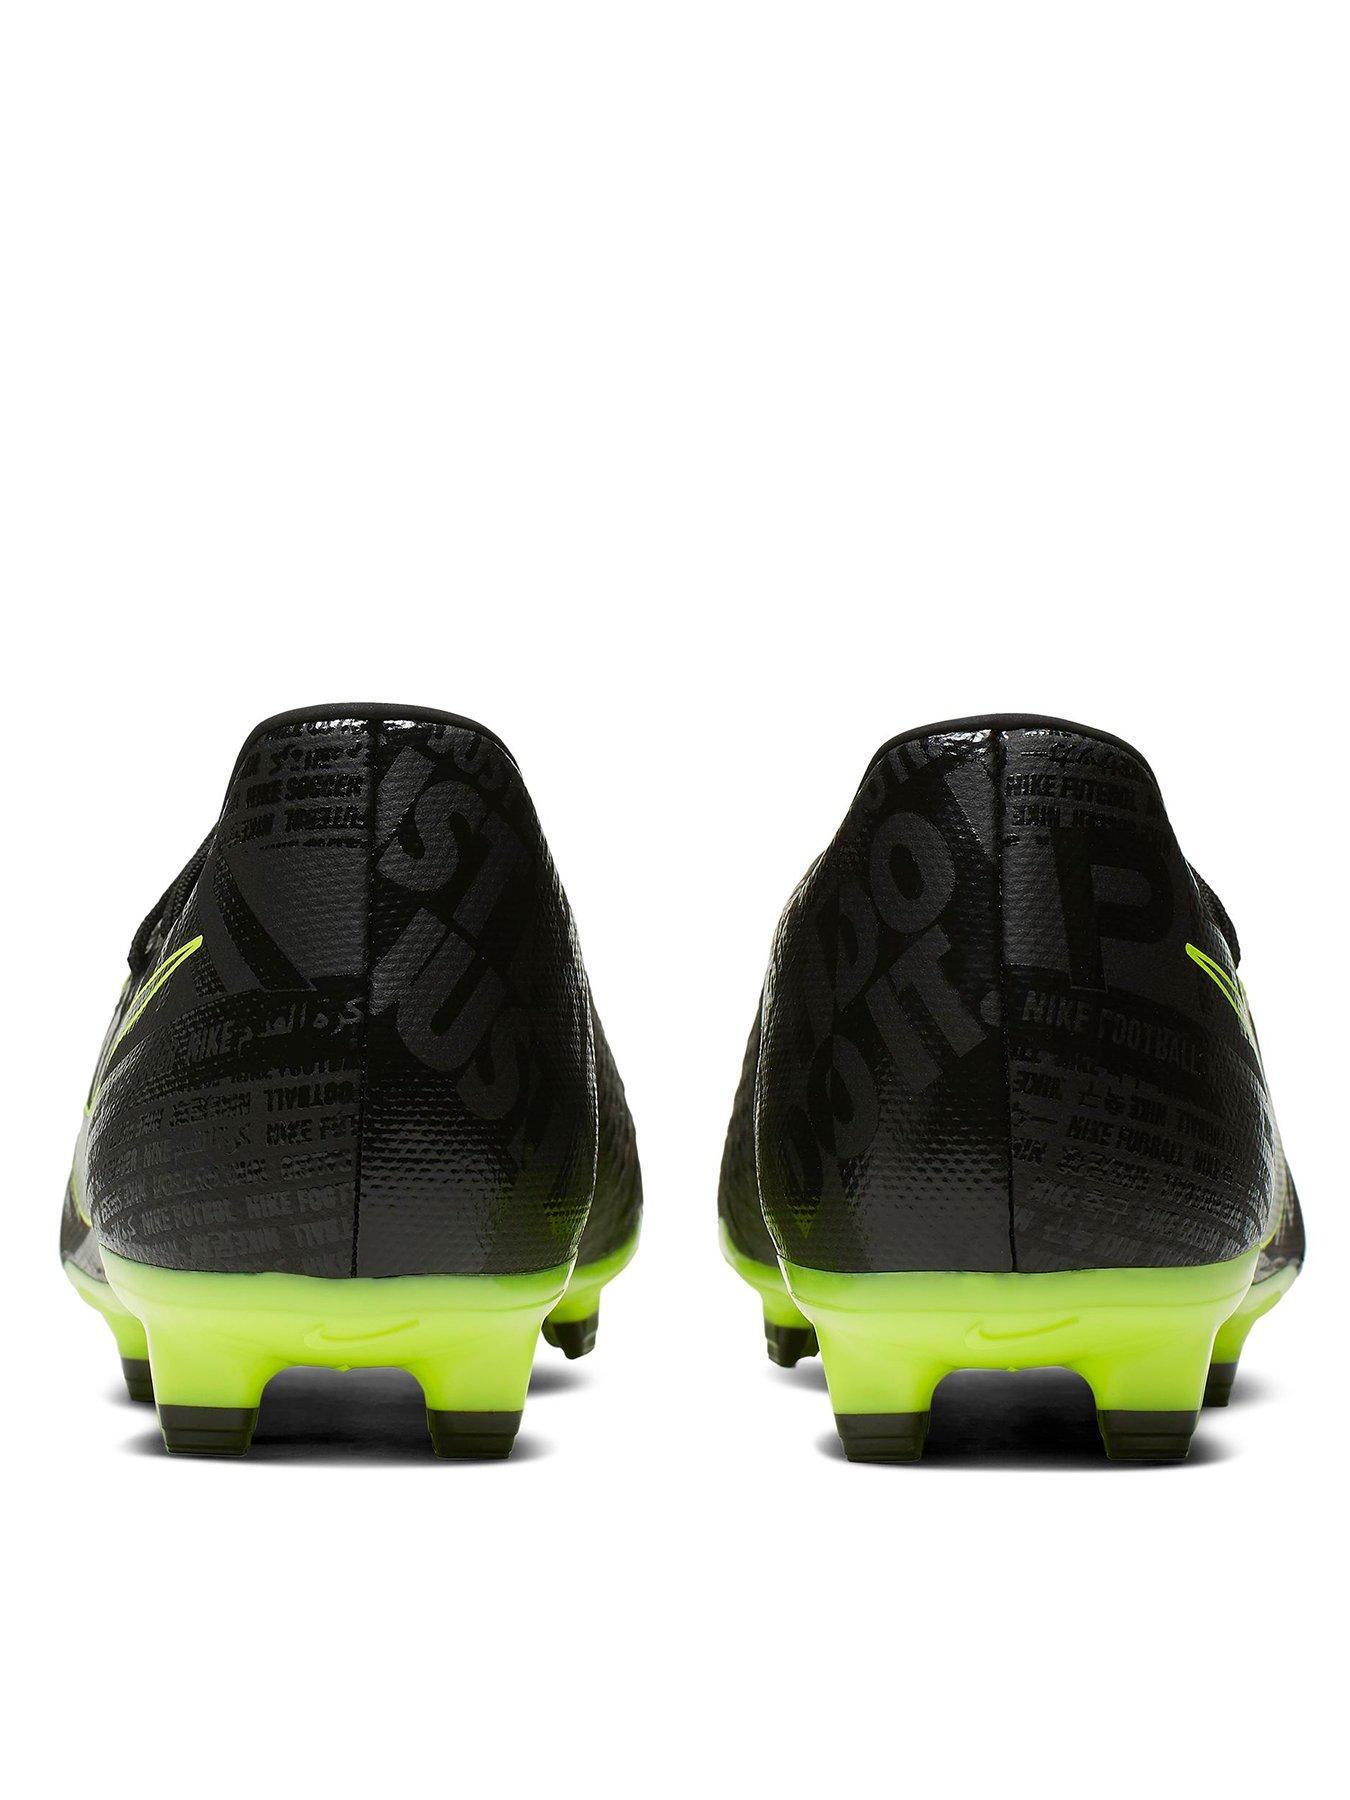 Nike Phantom VSN Soccer Shoes Cheap Soccer Cleats